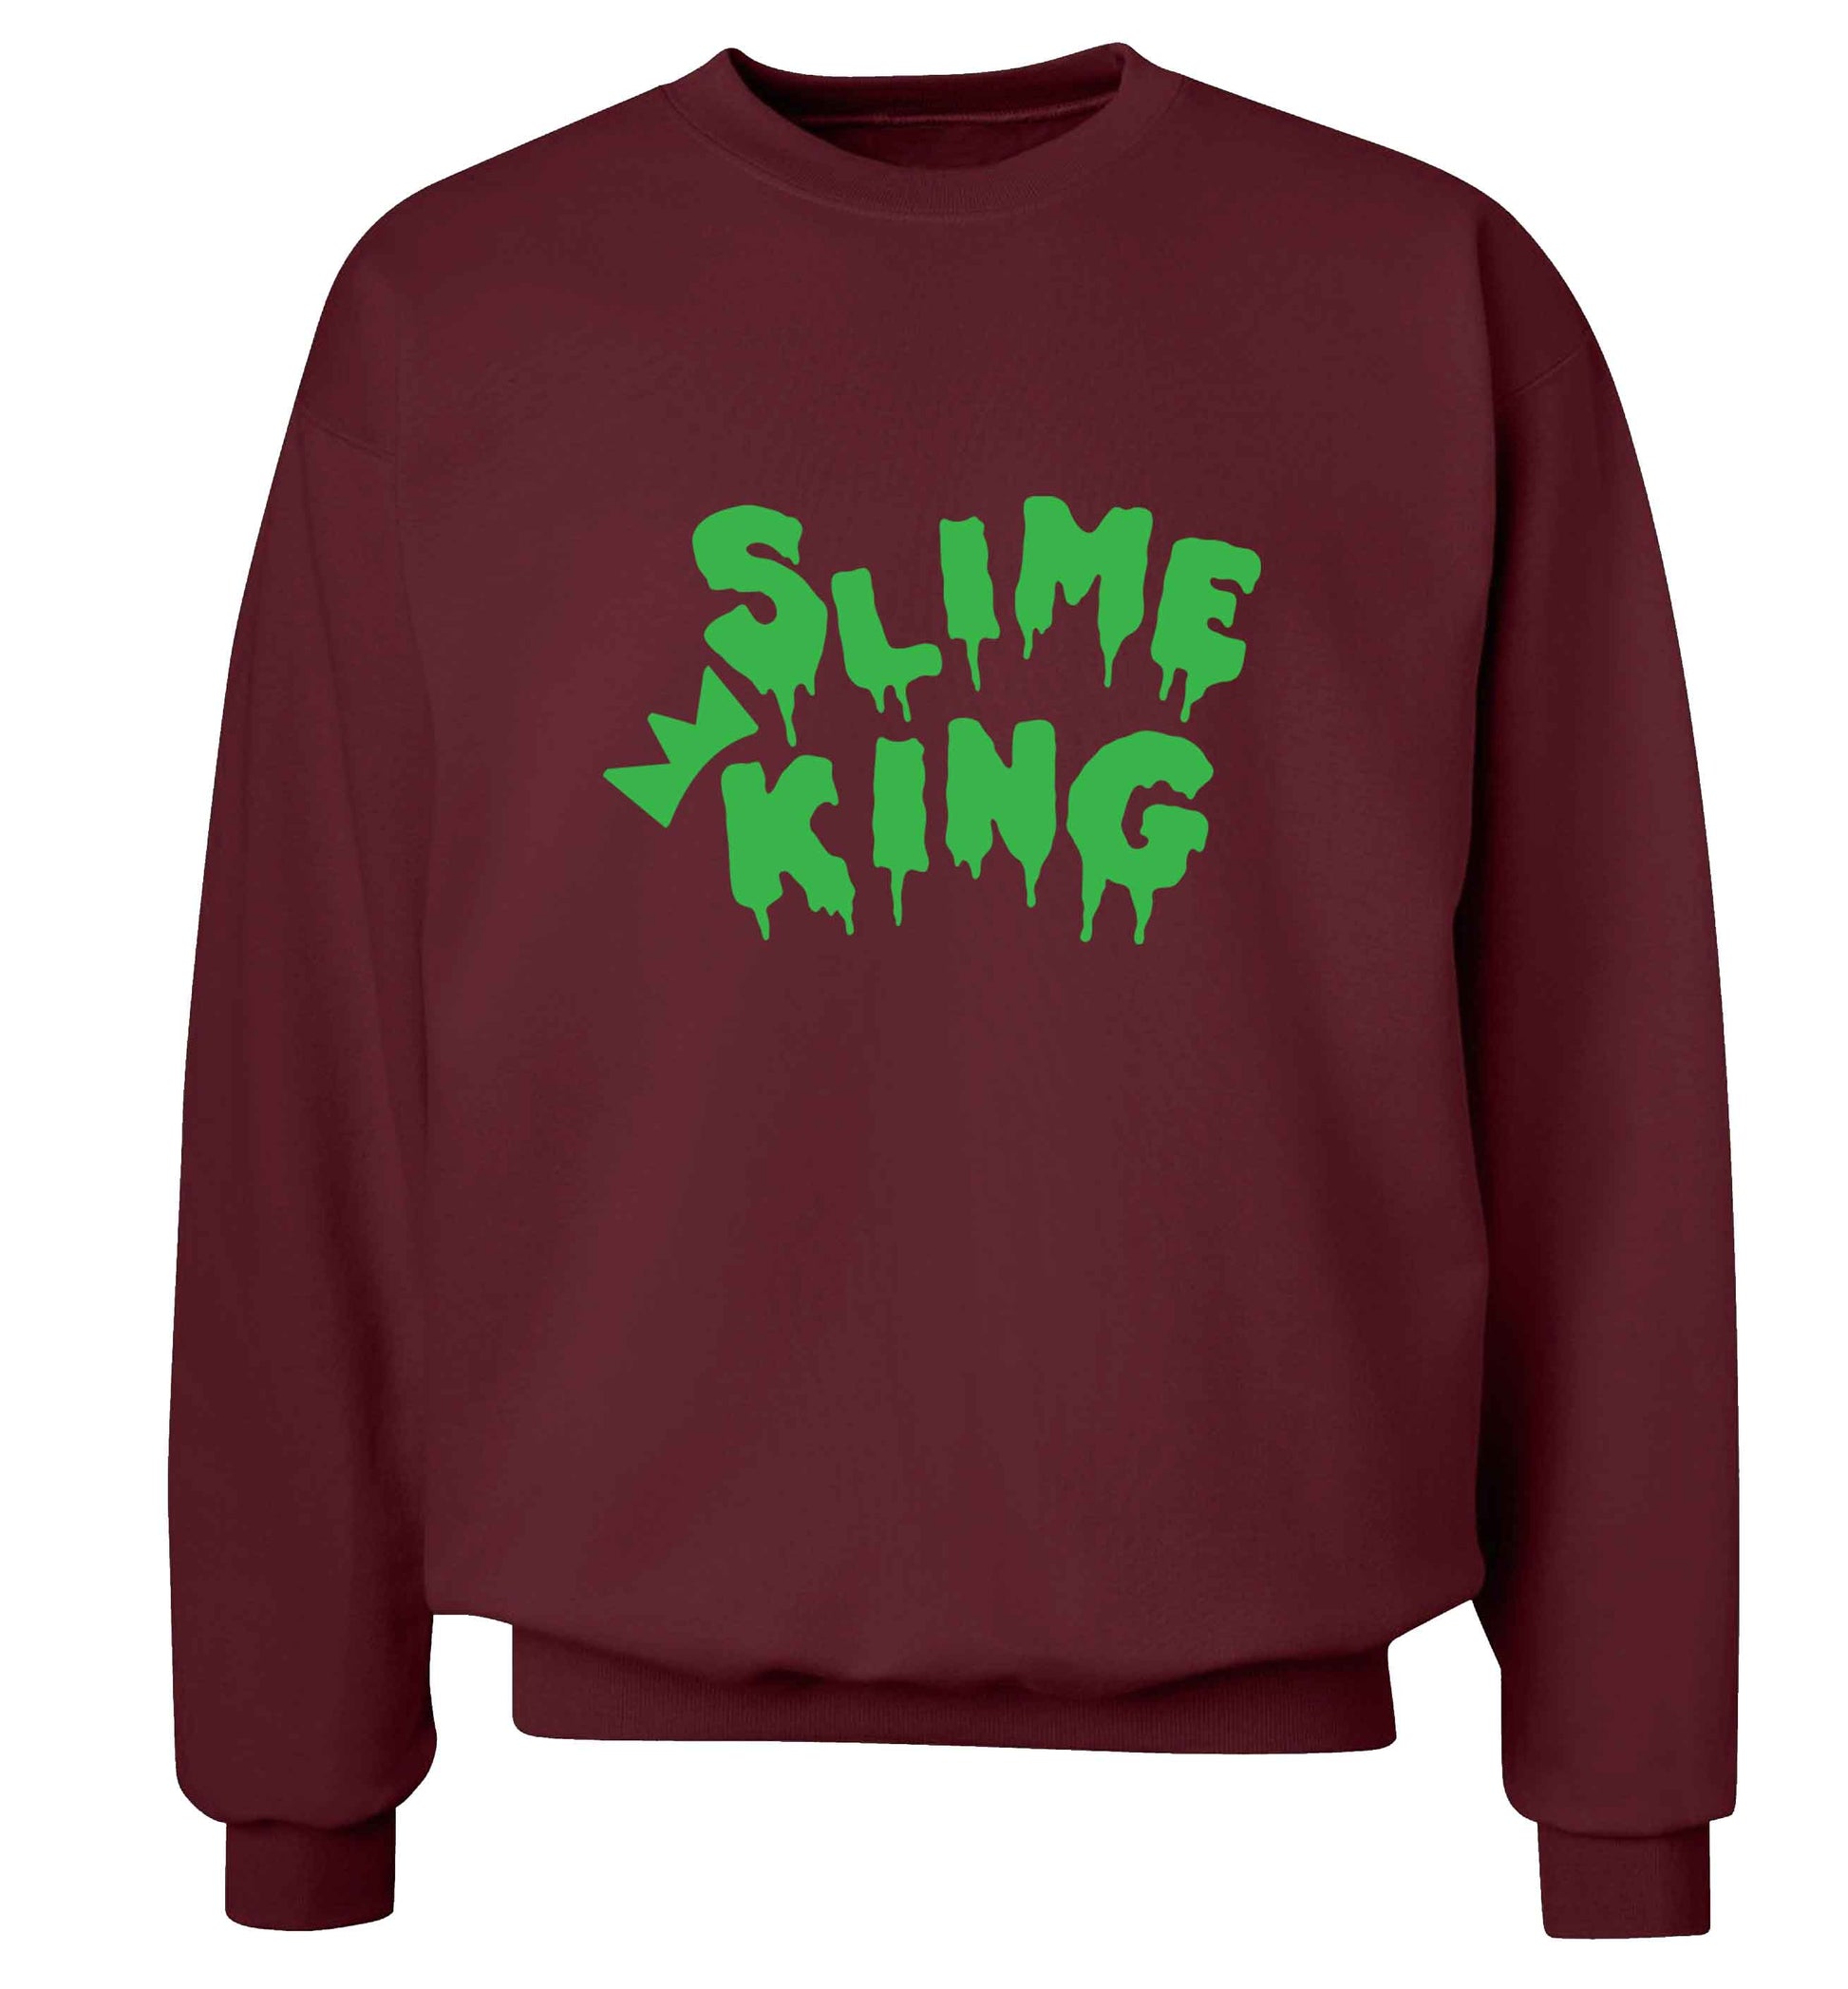 Neon green slime king adult's unisex maroon sweater 2XL